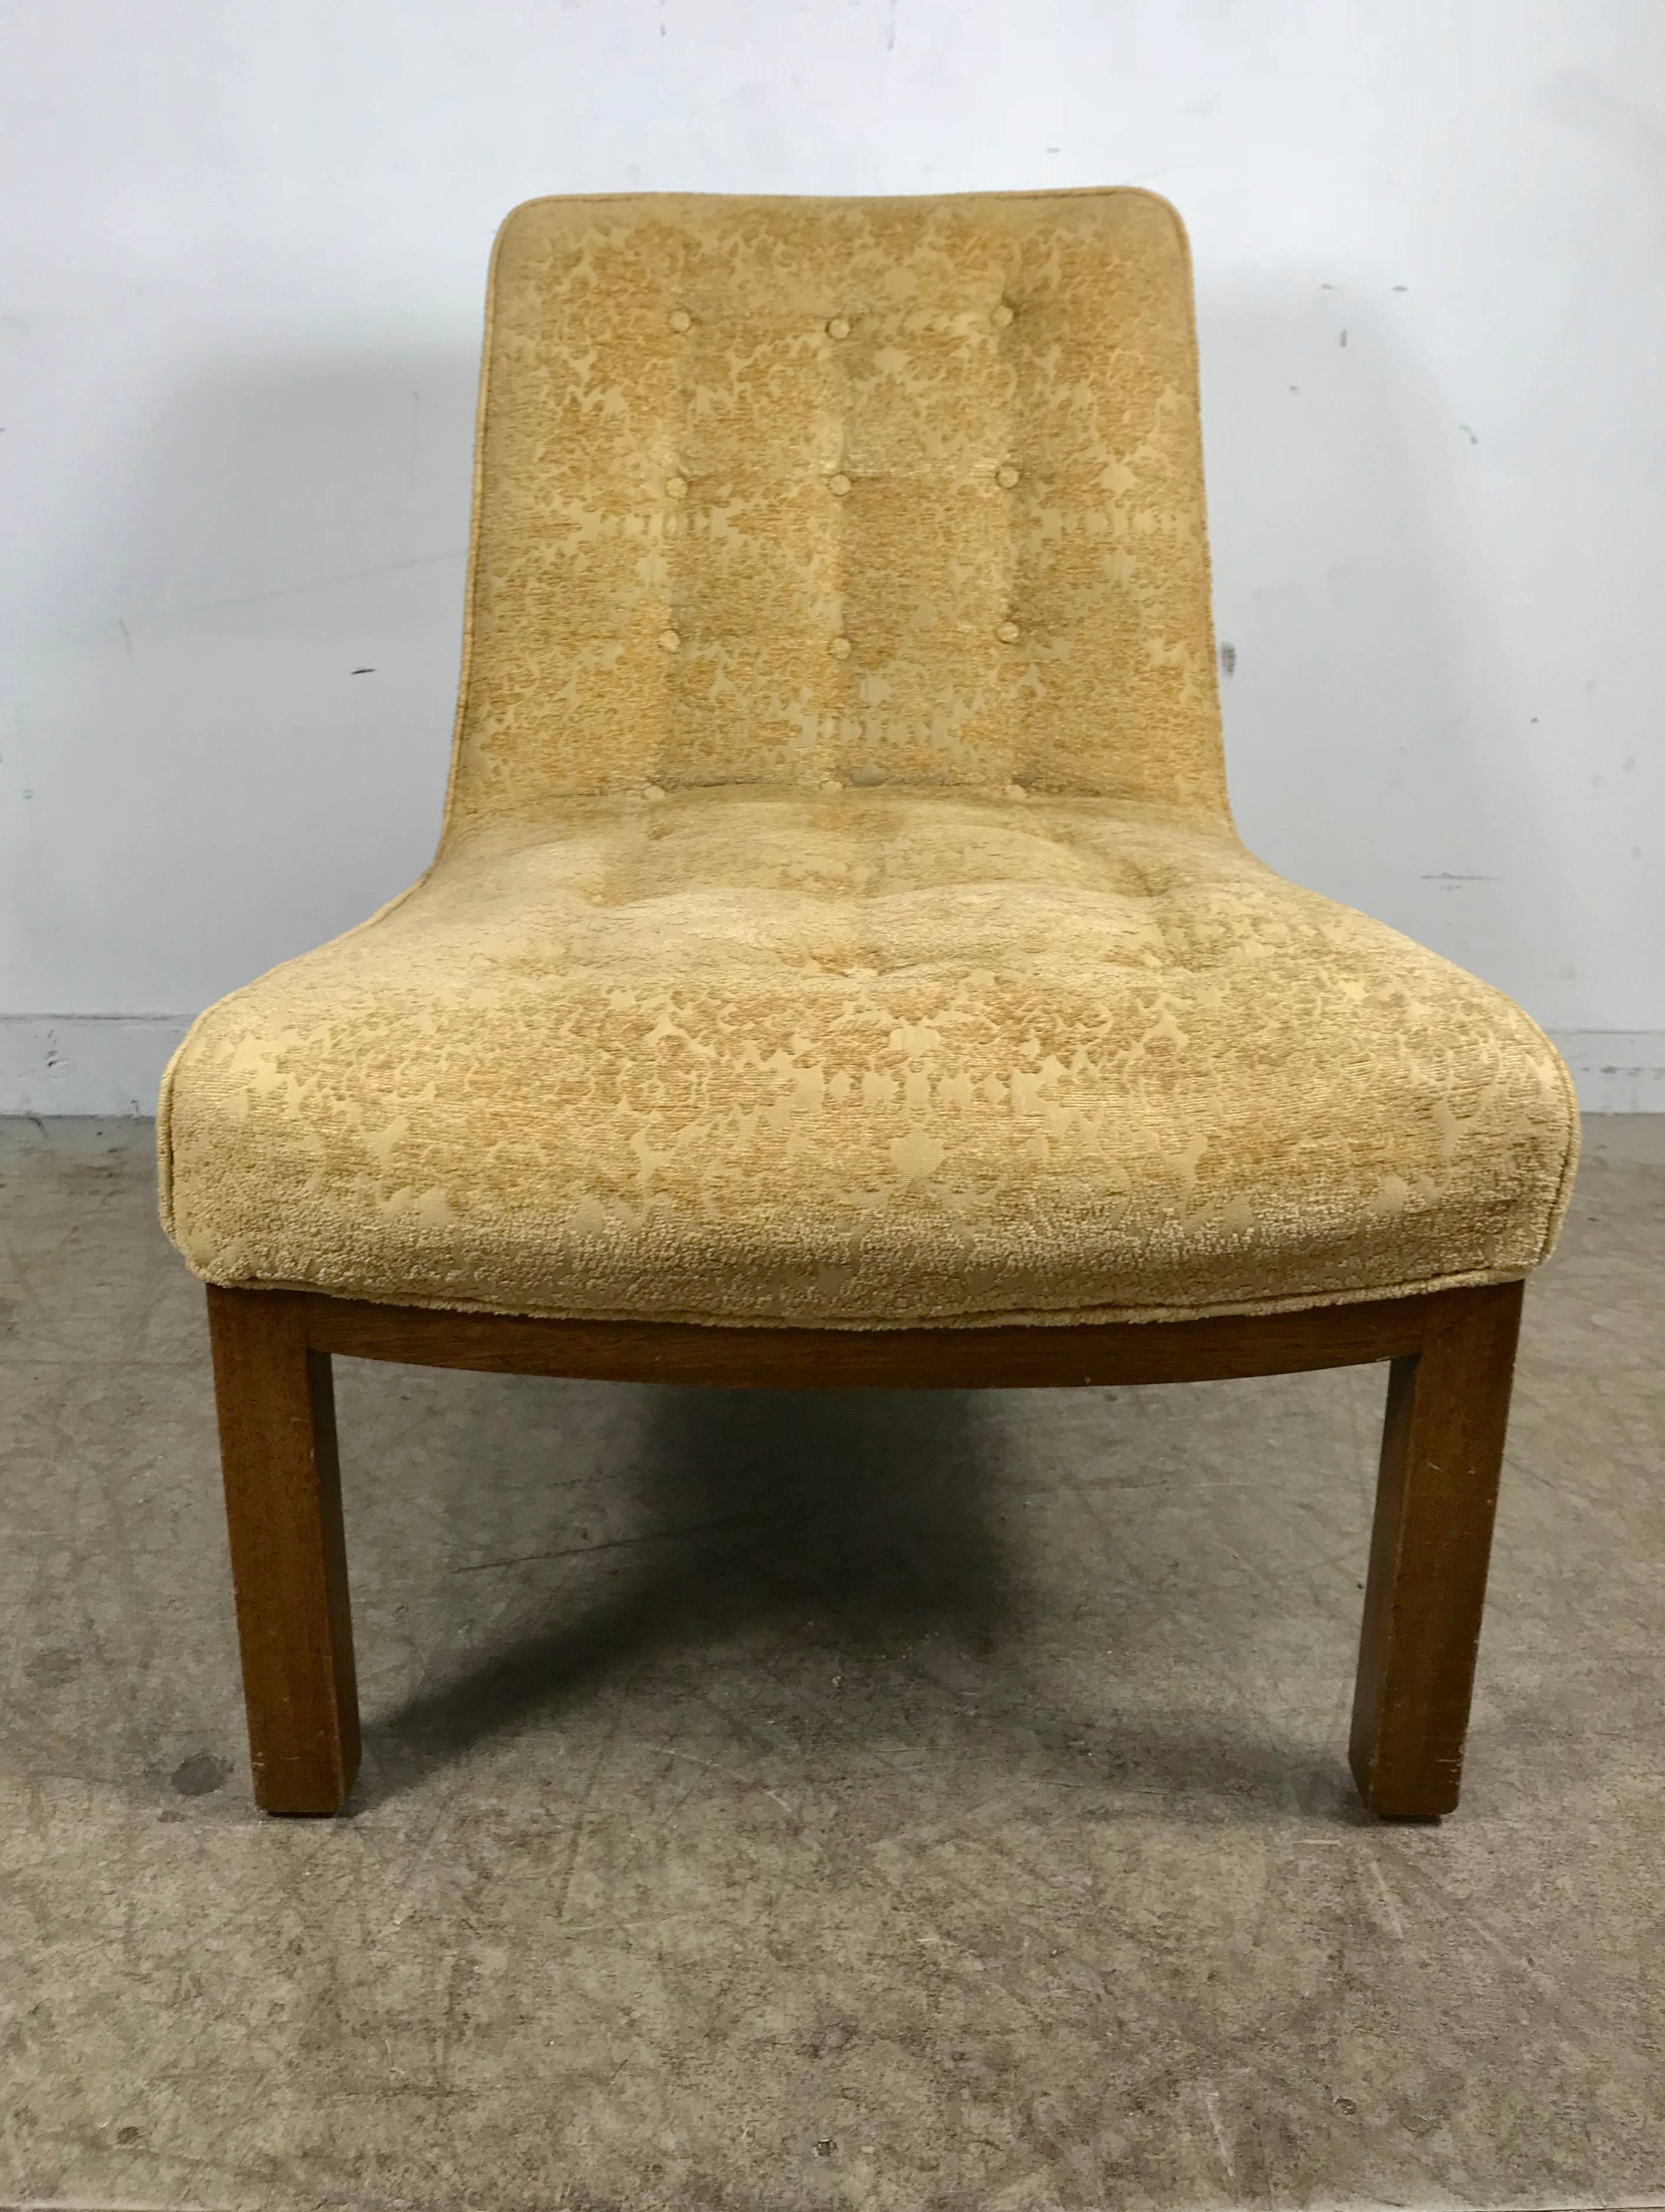 20th Century Classic Modern Slipper Chair Designed by Edward Wormley for Dunbar